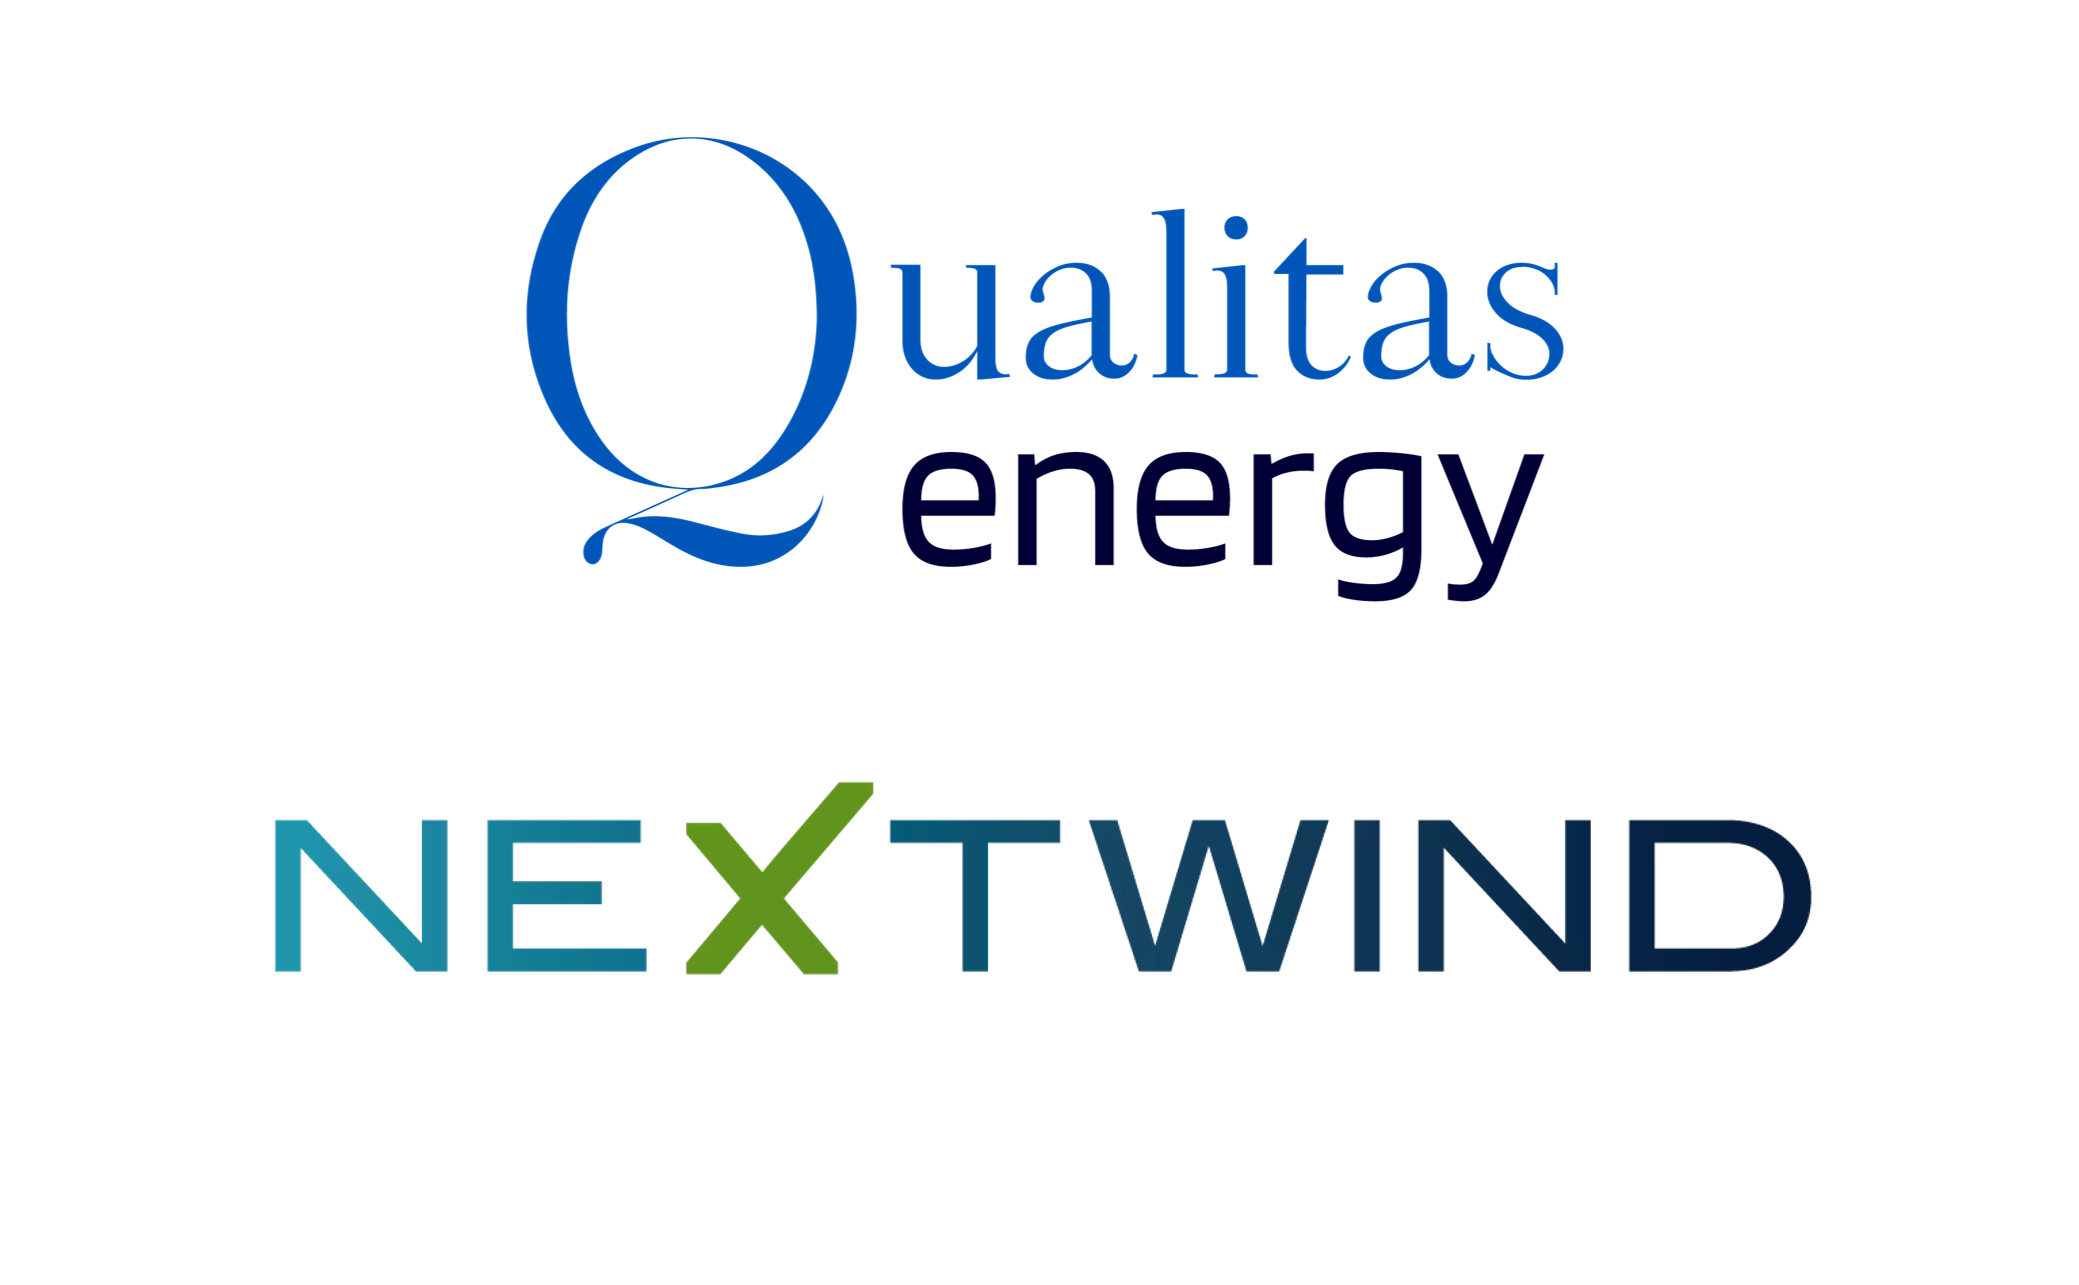 Qualitas energy & NeXtWind